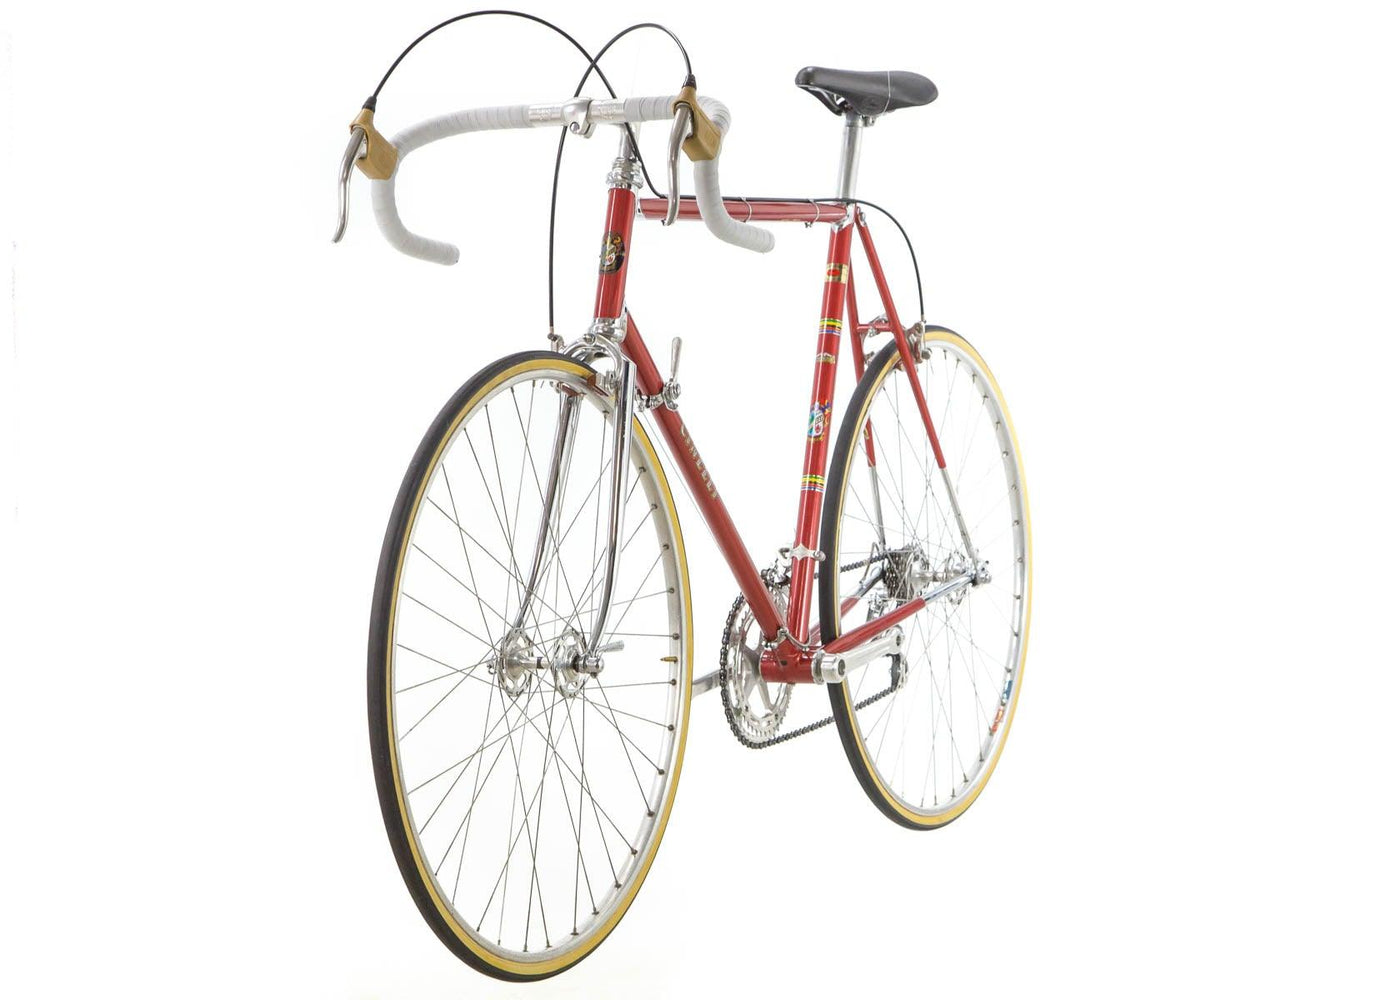 Cinelli S.C. Super Corsa Classic Bike 1960s - Steel Vintage Bikes